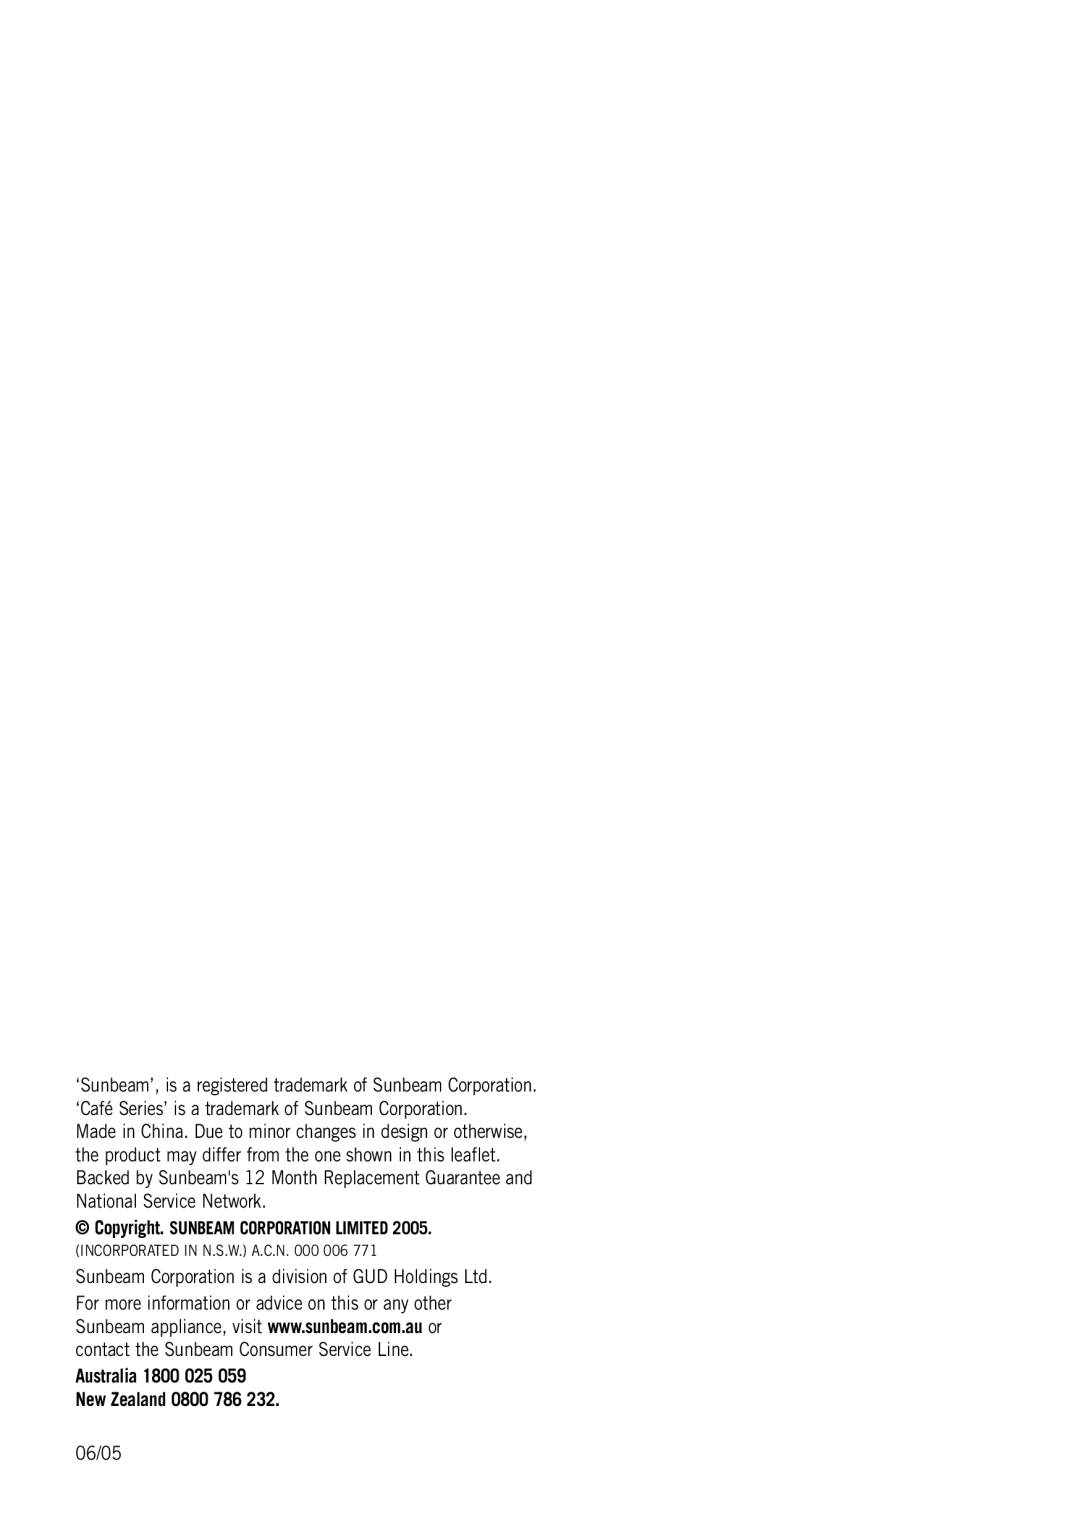 Sunbeam EM5800 manual 06/05, Copyright. SUNBEAM CORPORATION LIMITED, INCORPORATED IN N.S.W. A.C.N. 000 